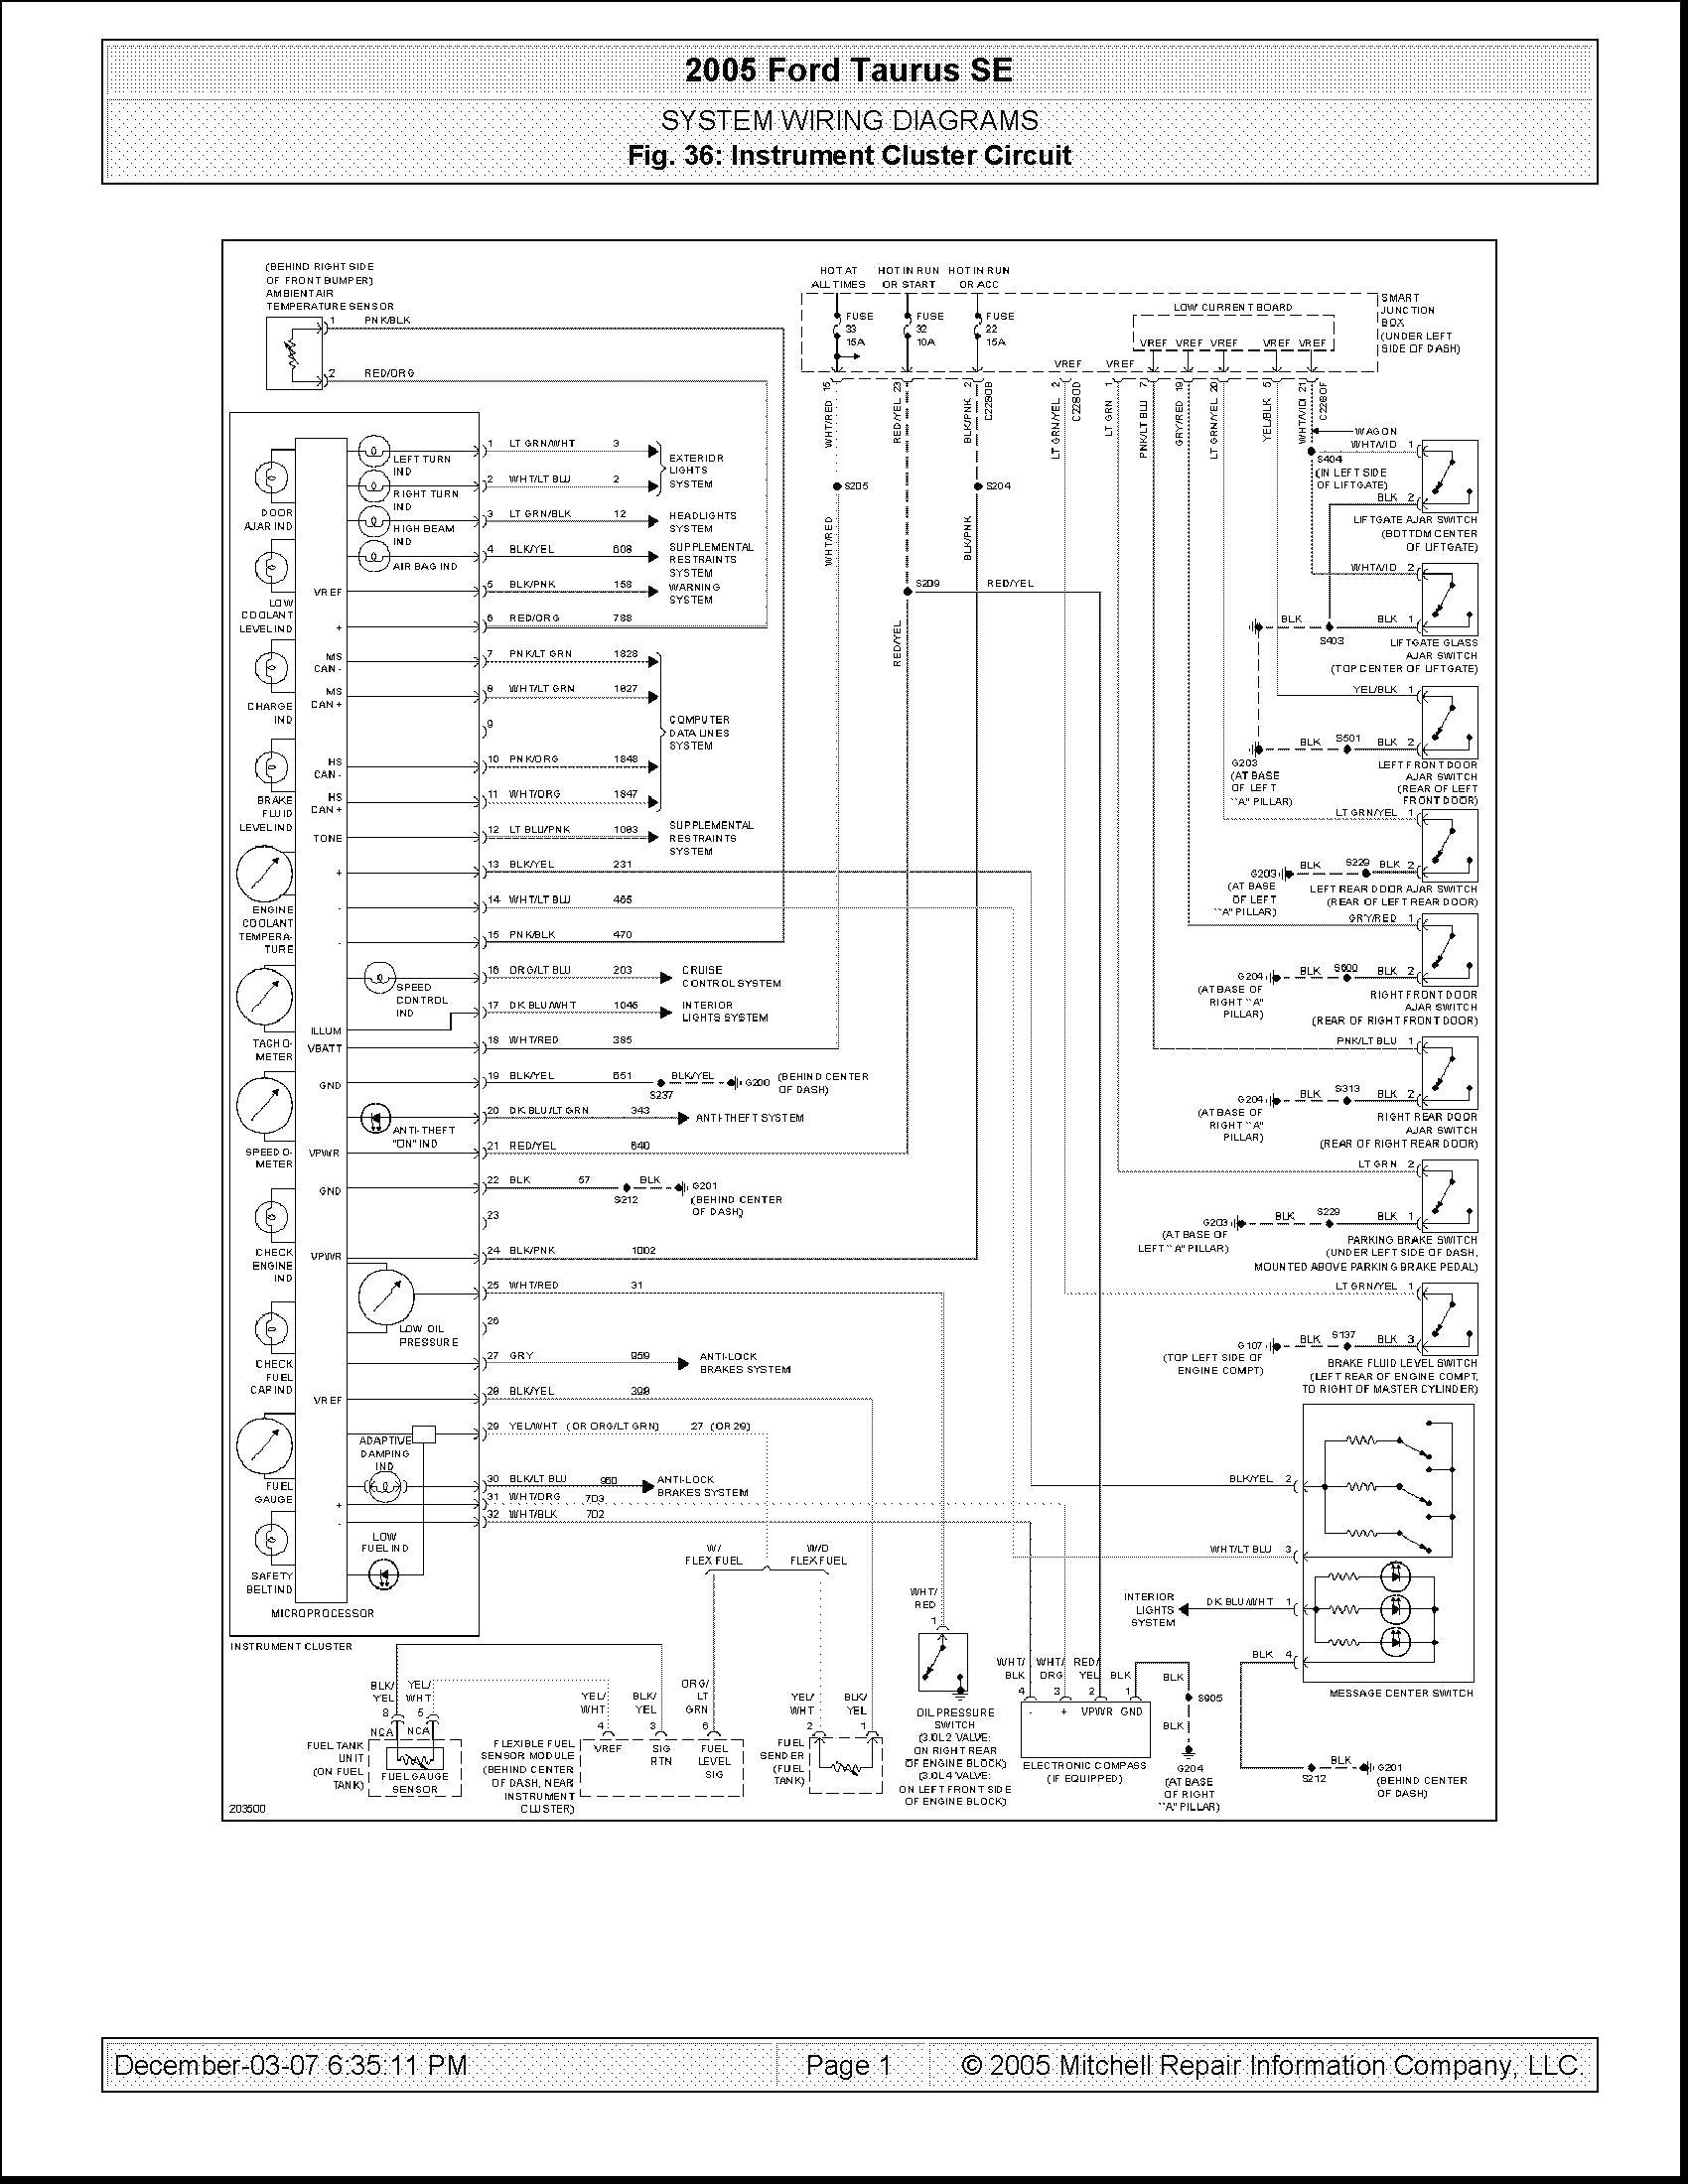 2000 ford Taurus Engine Diagram 2000 ford Taurus Stereo Wiring Diagram Of 2000 ford Taurus Engine Diagram